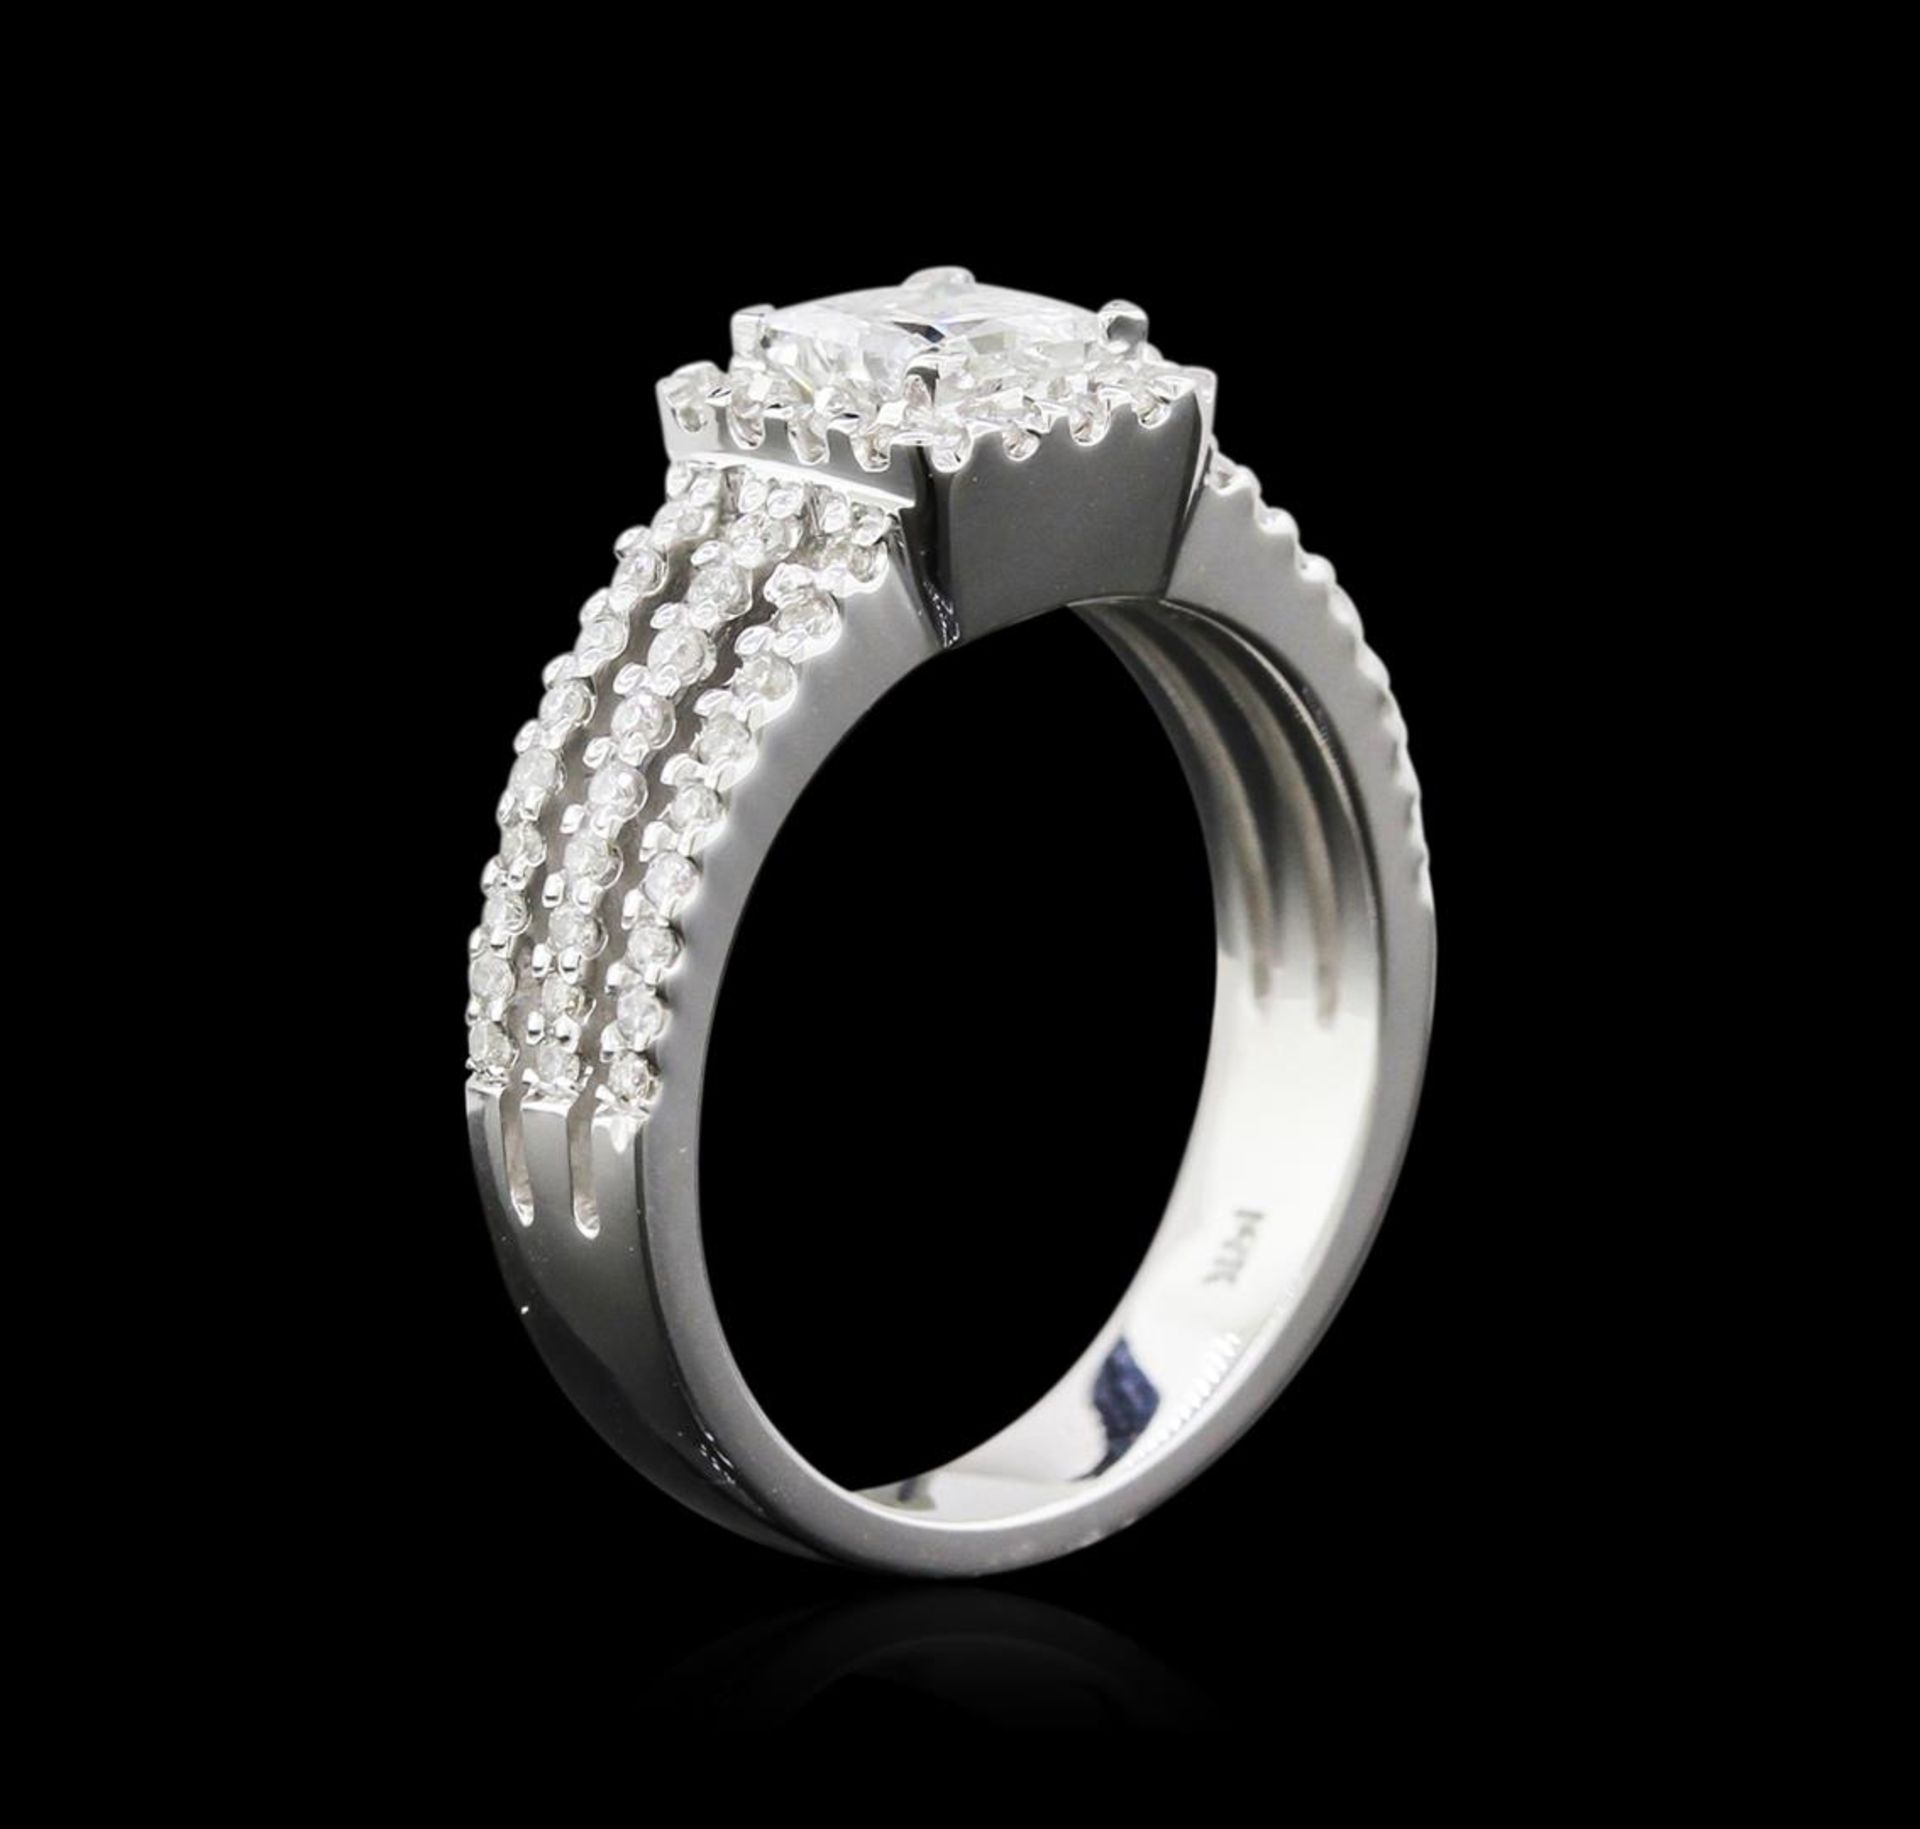 14KT White Gold 1.13 ctw Diamond Ring - Image 3 of 4